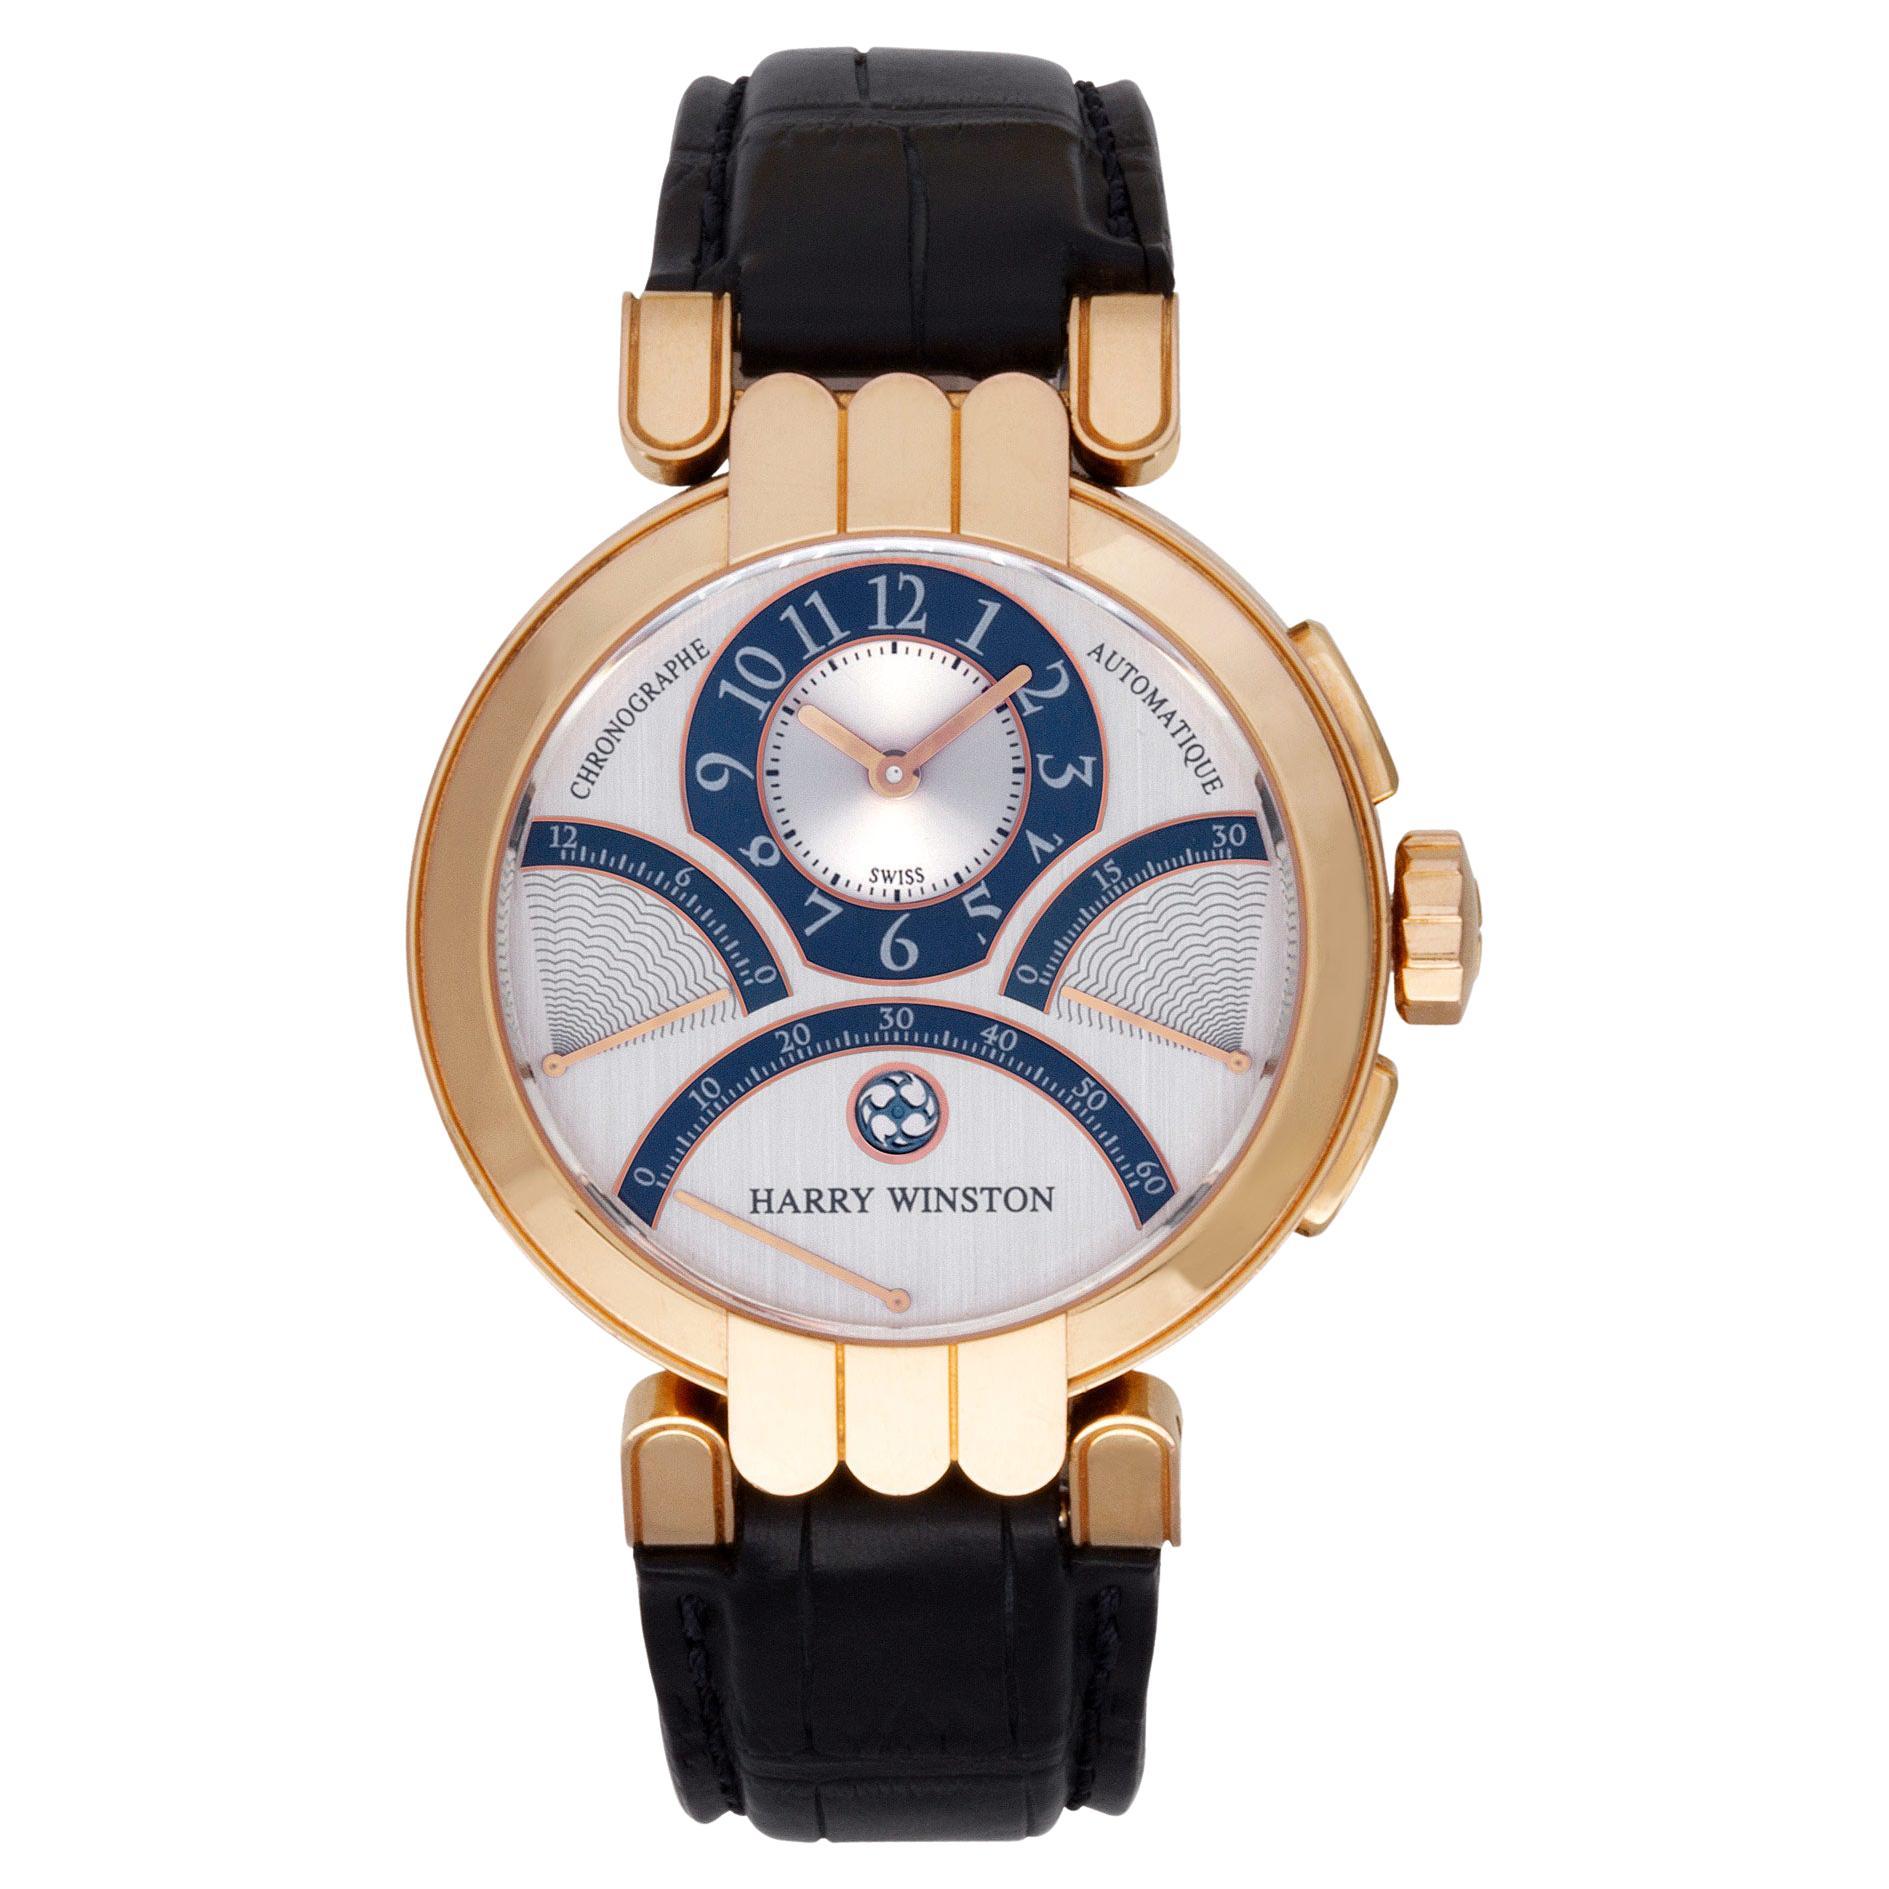 Harry Winston Premiere Ref. PREACT39RR002 in 18k Rose Gold Watch Auto